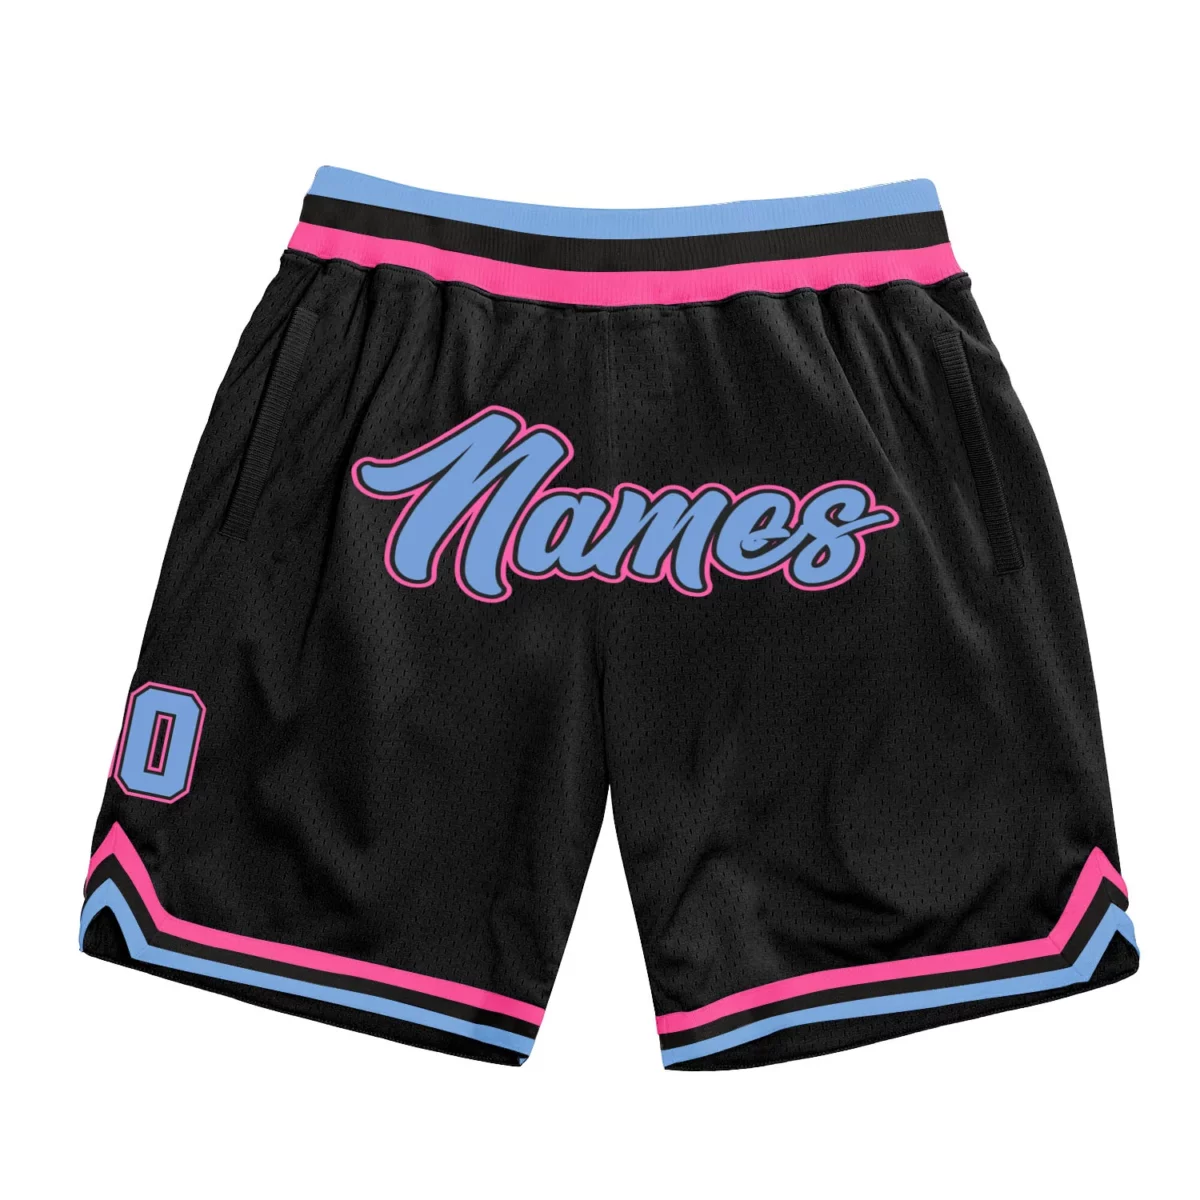 Black & Pink Color Basketball Shorts 1